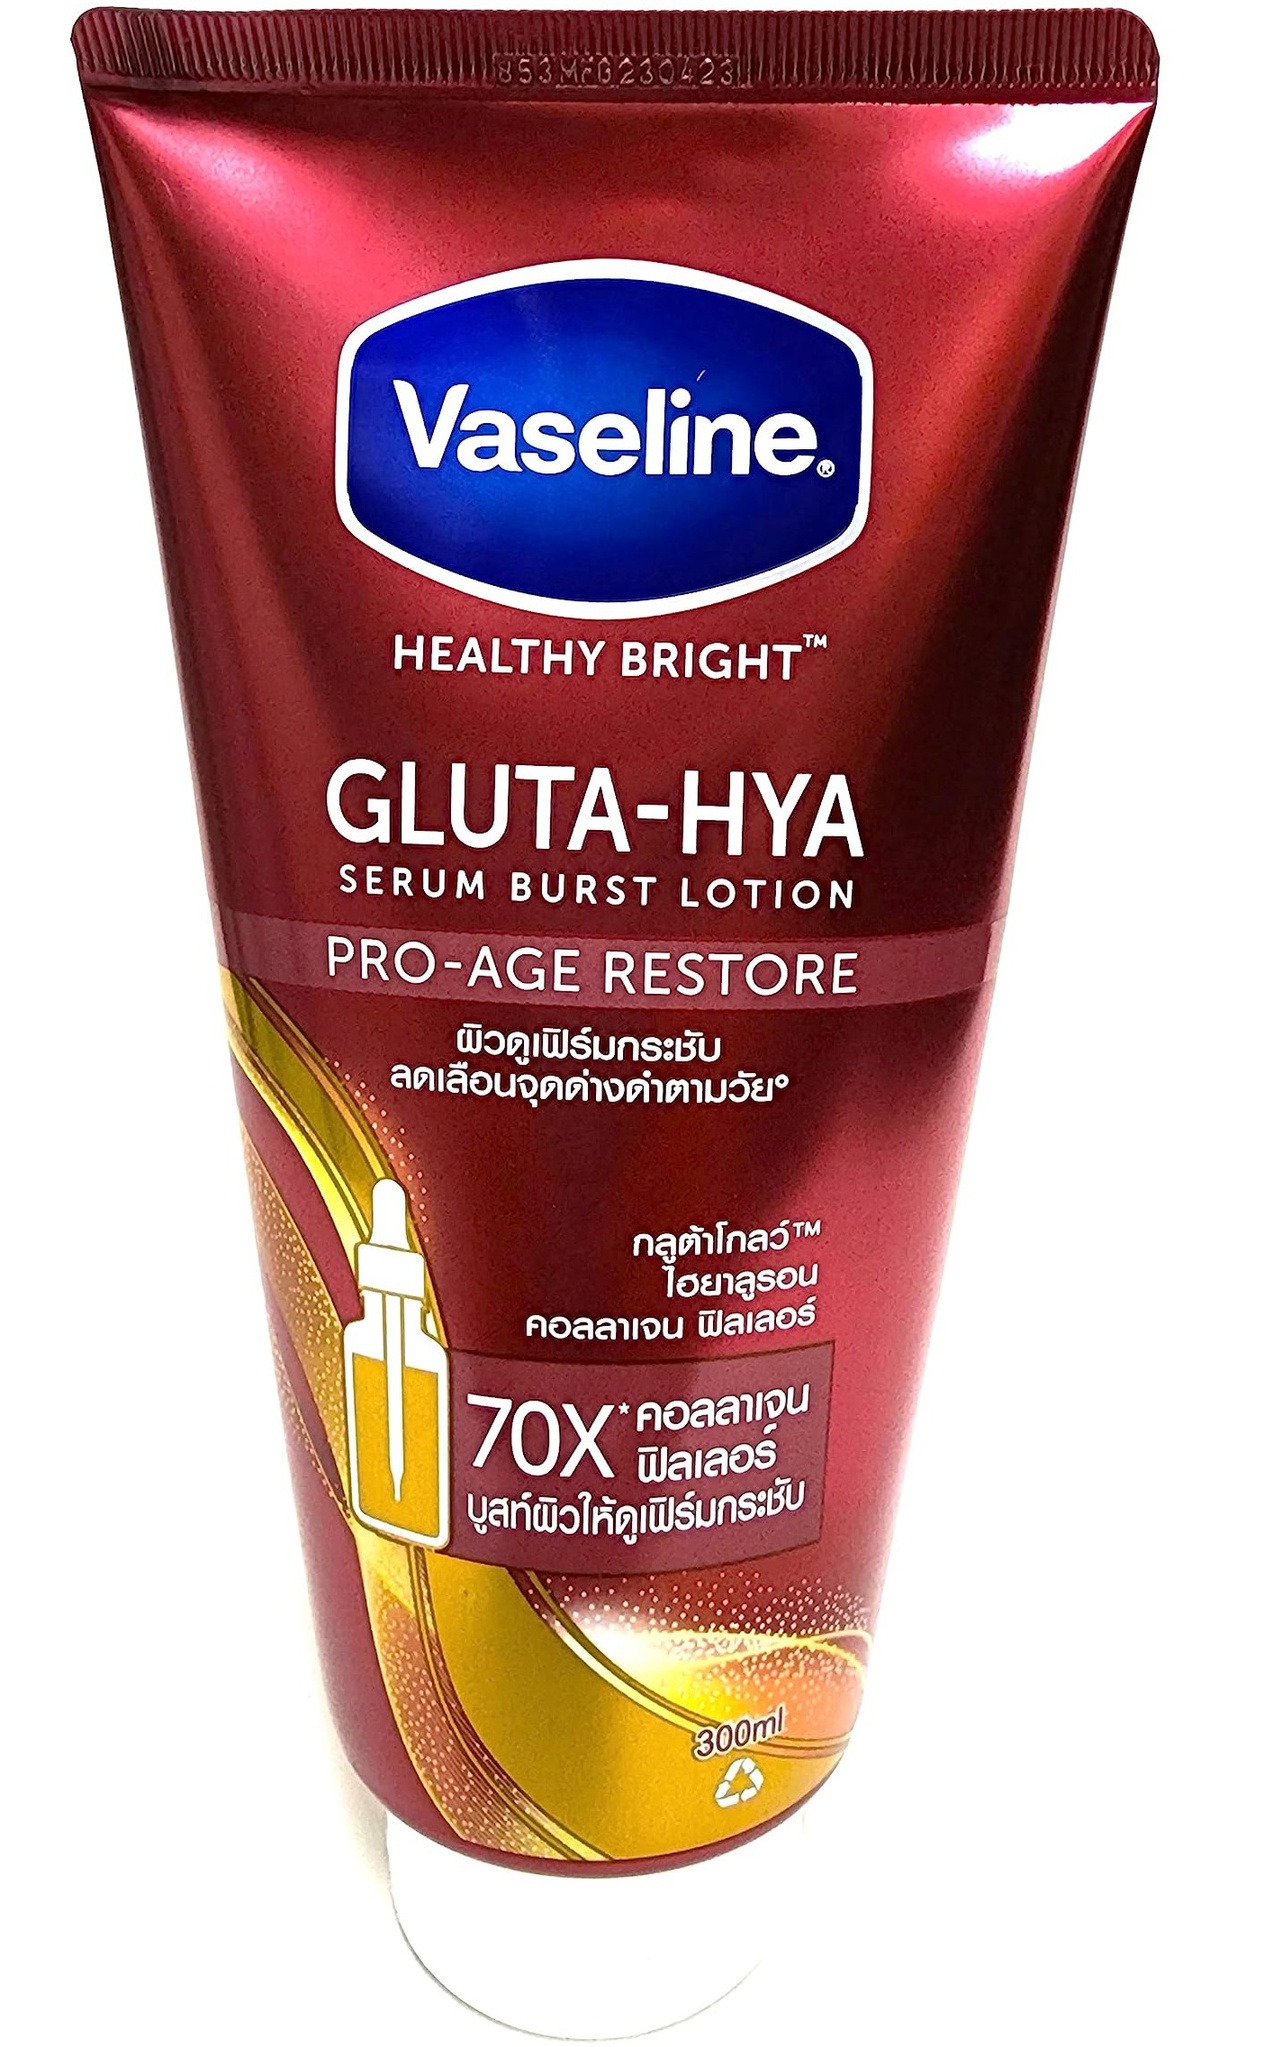 Vaseline Gluta-hya Pro Age Restore